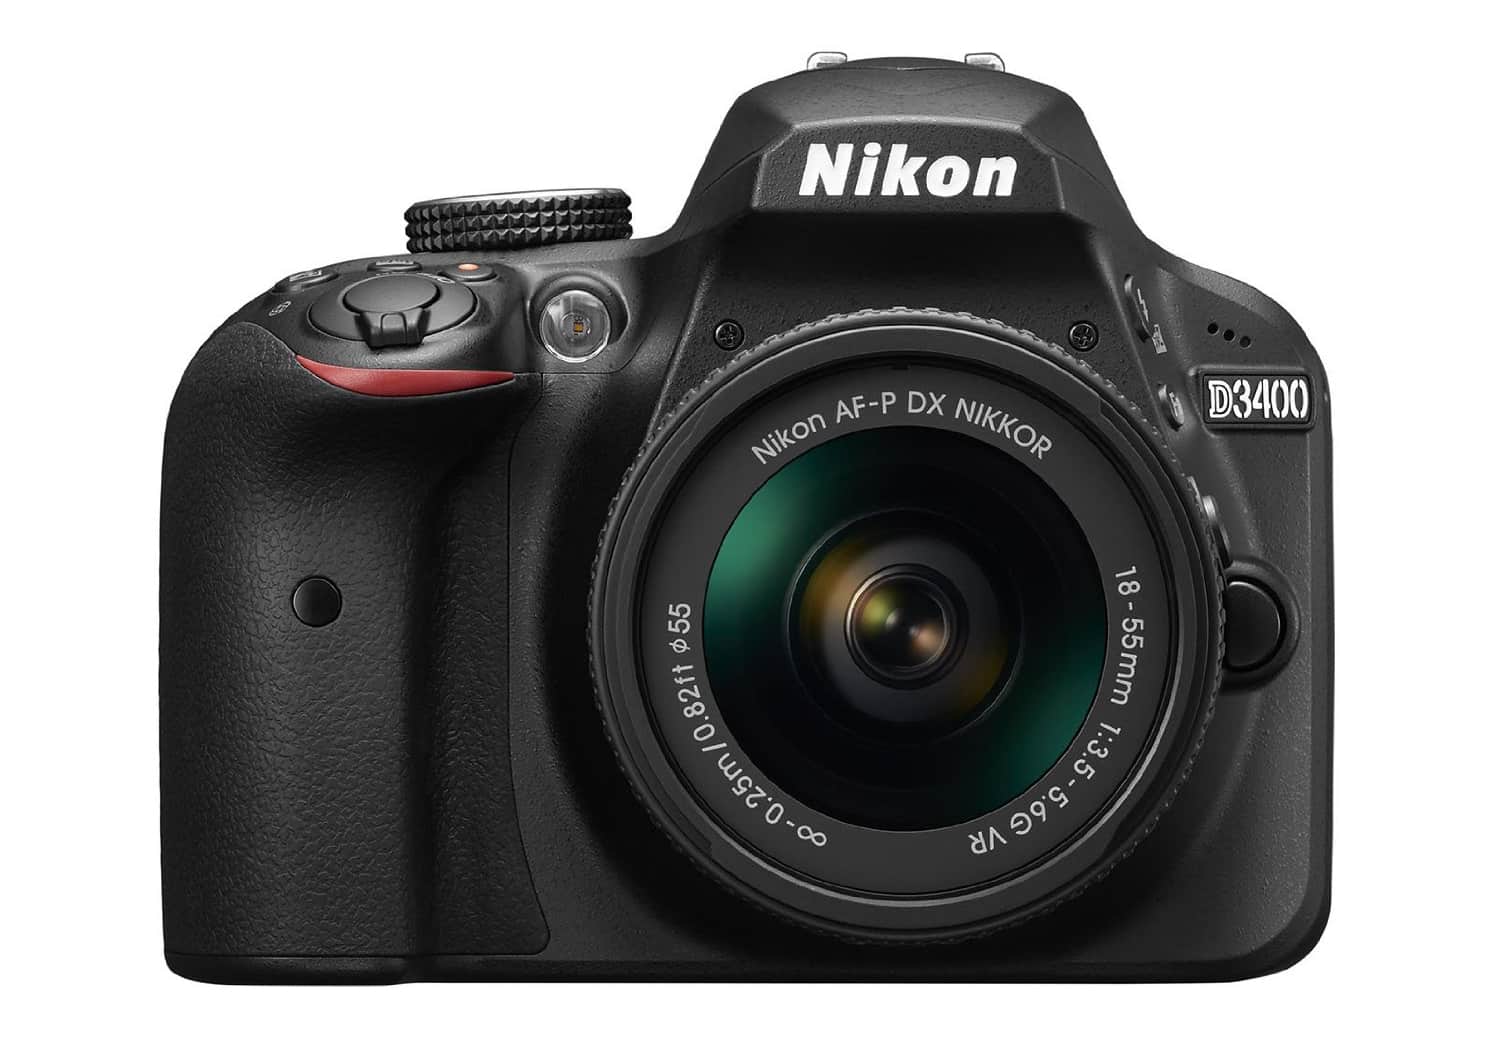 Front view of Nikon's D3400 DSLR Camera.